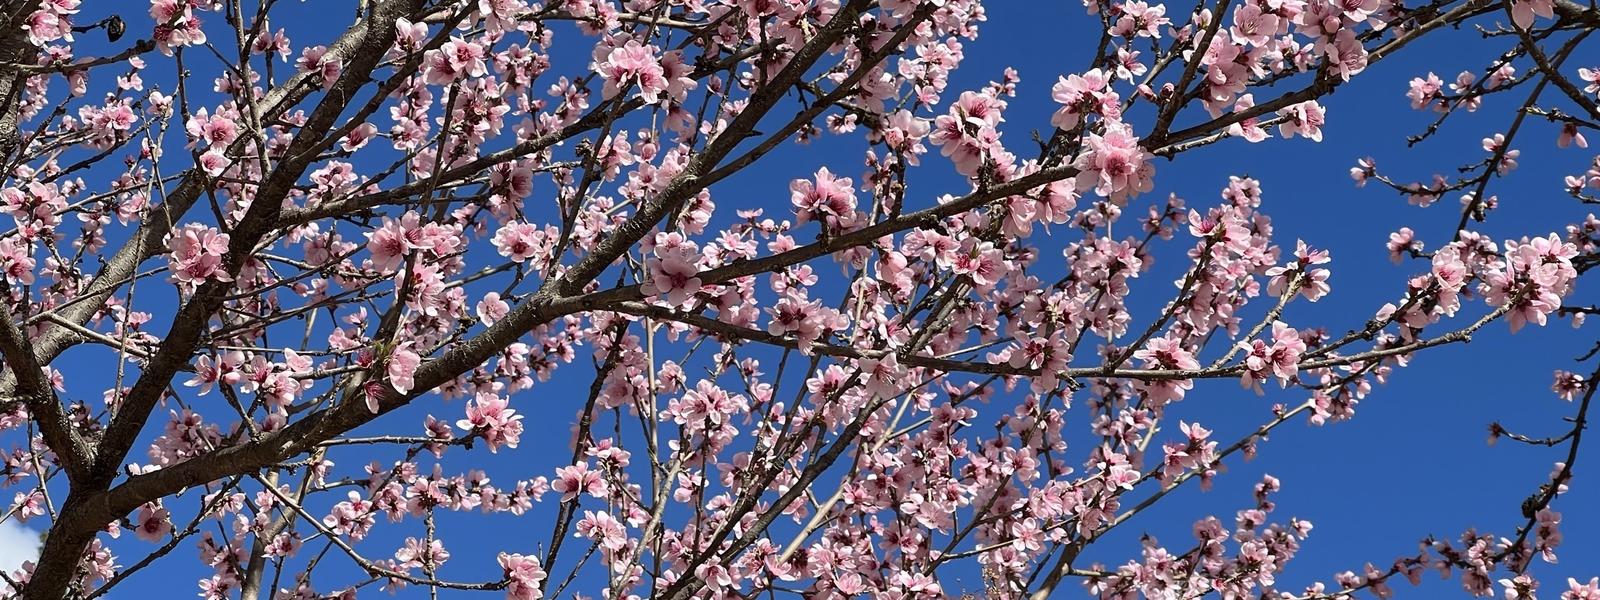 Cherry blossom season in Haa